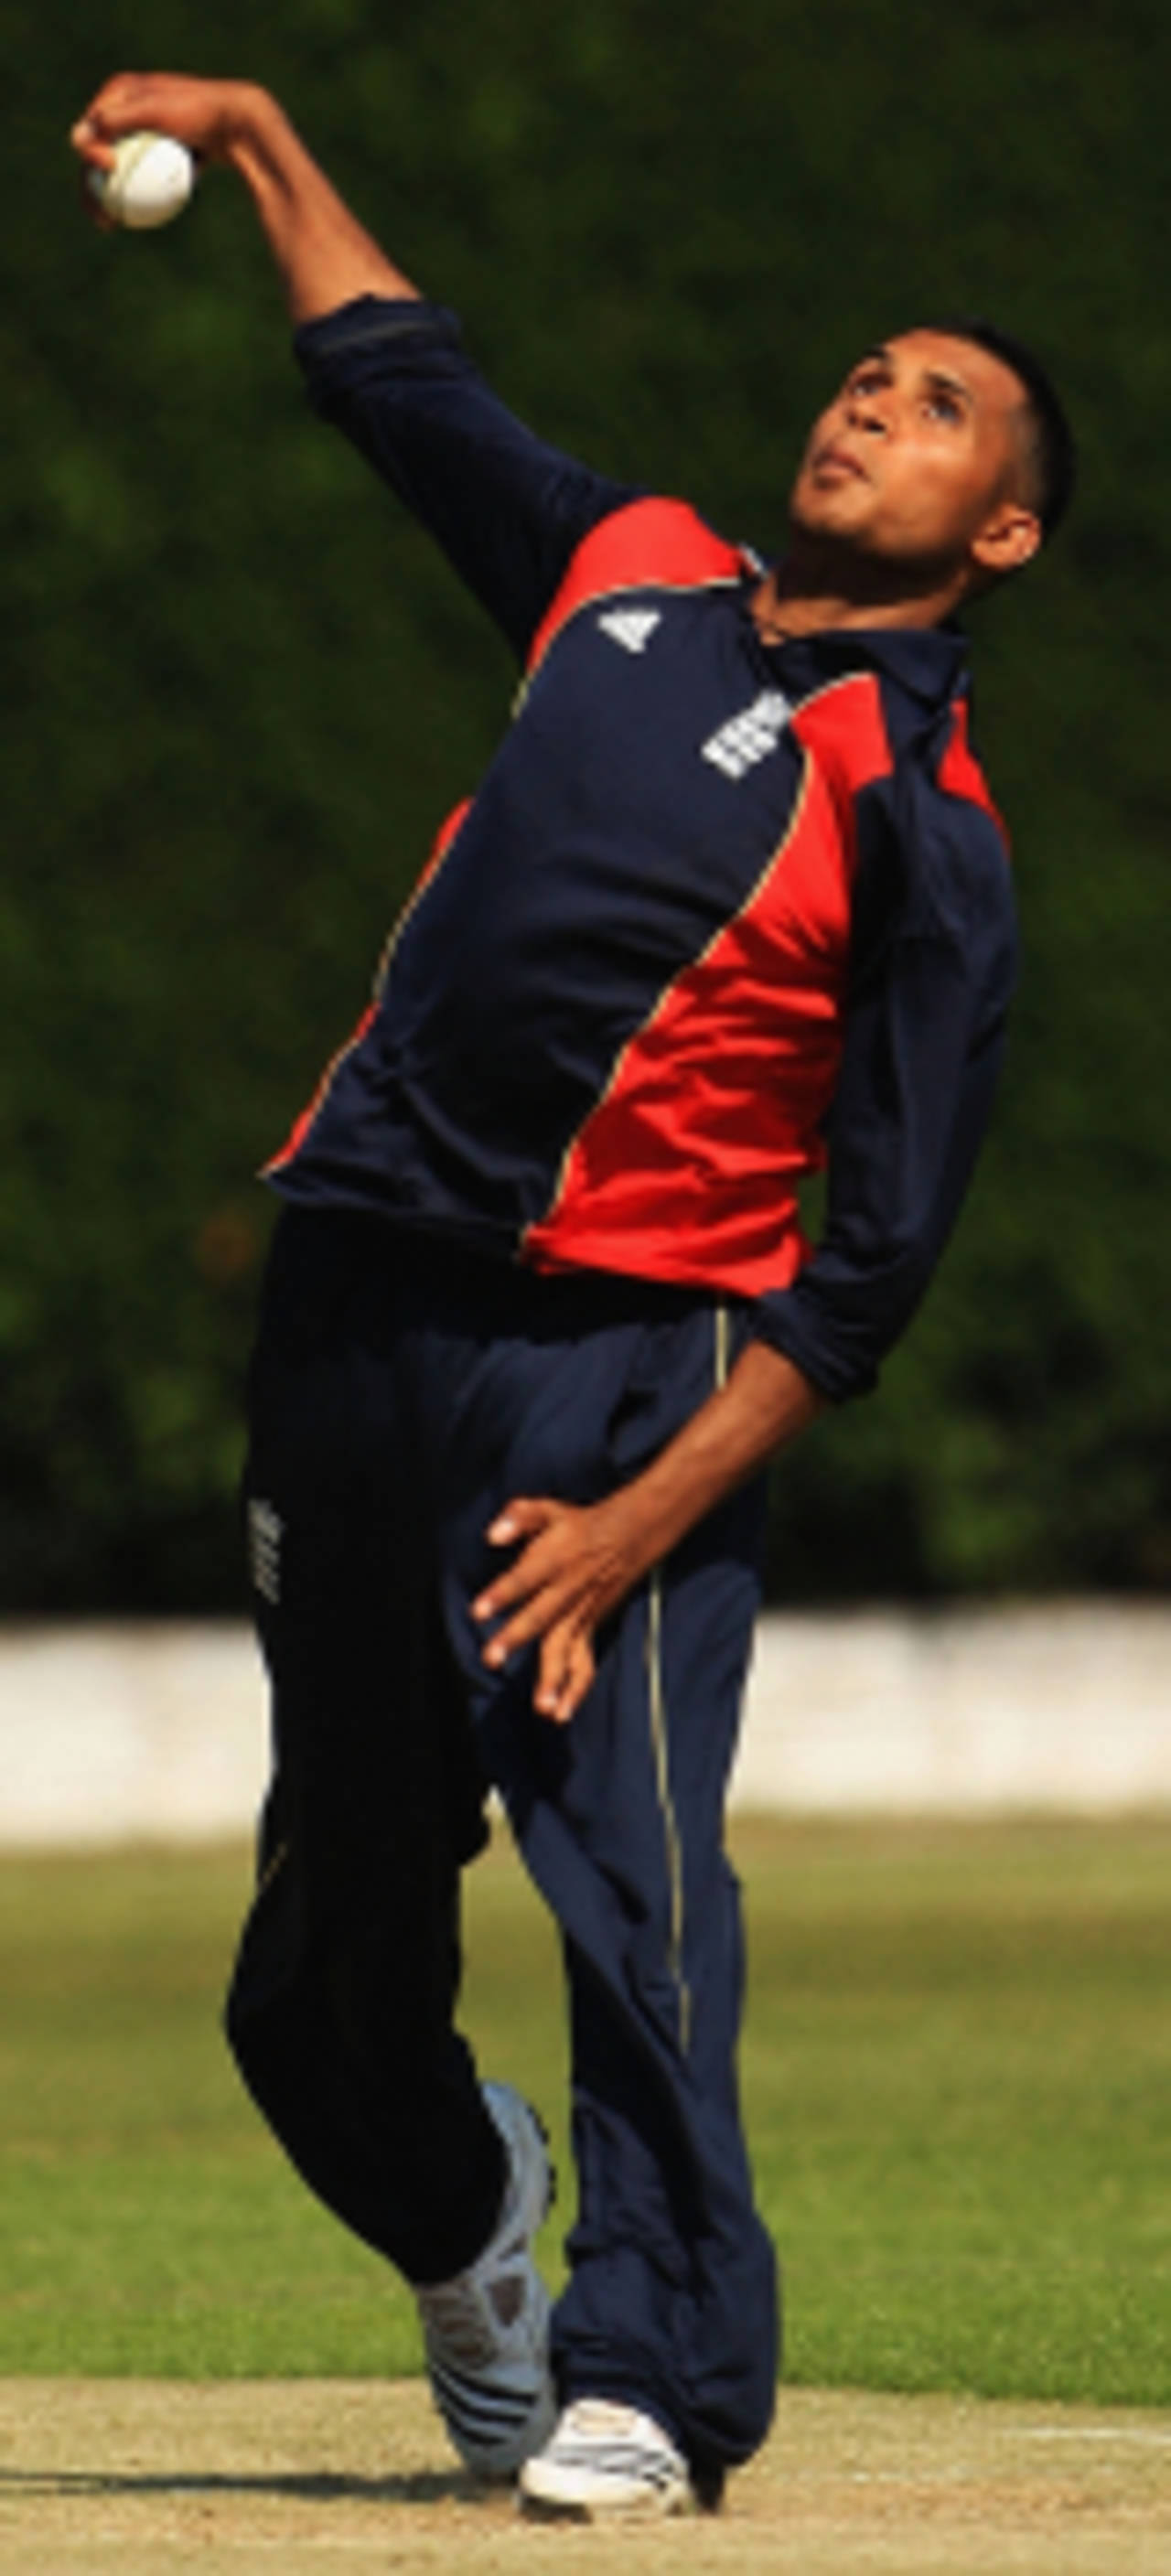 Adil Rashid in action, Loughborough, May 31, 2009